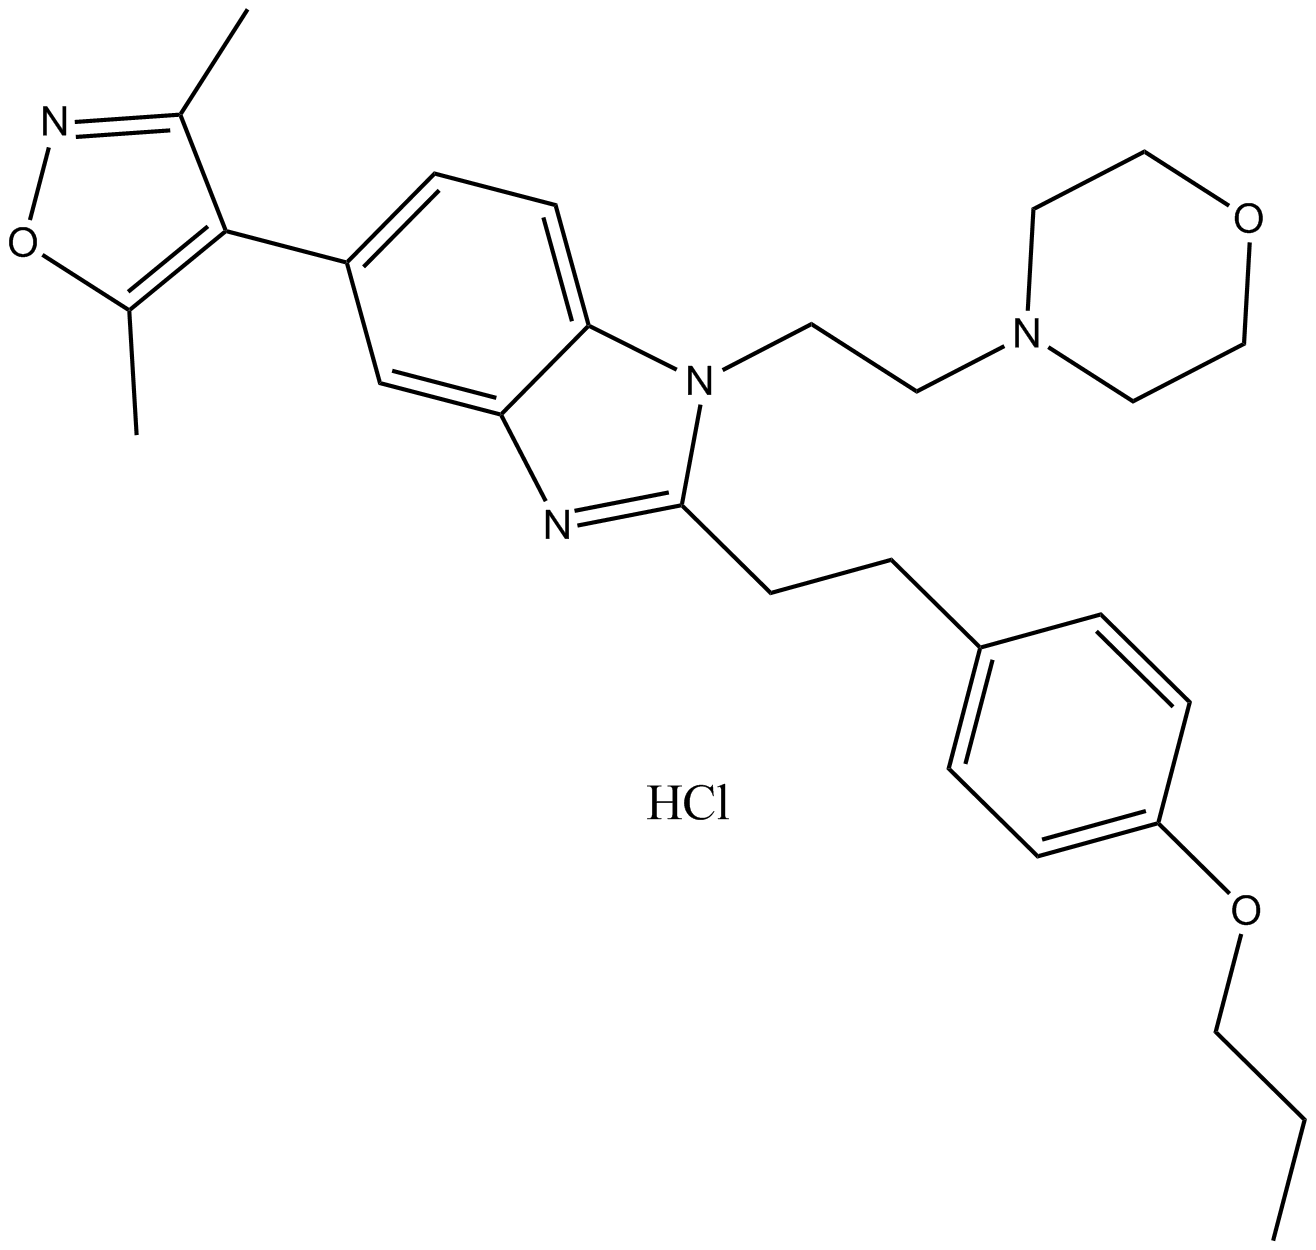 PF-CBP1 hydrochloride